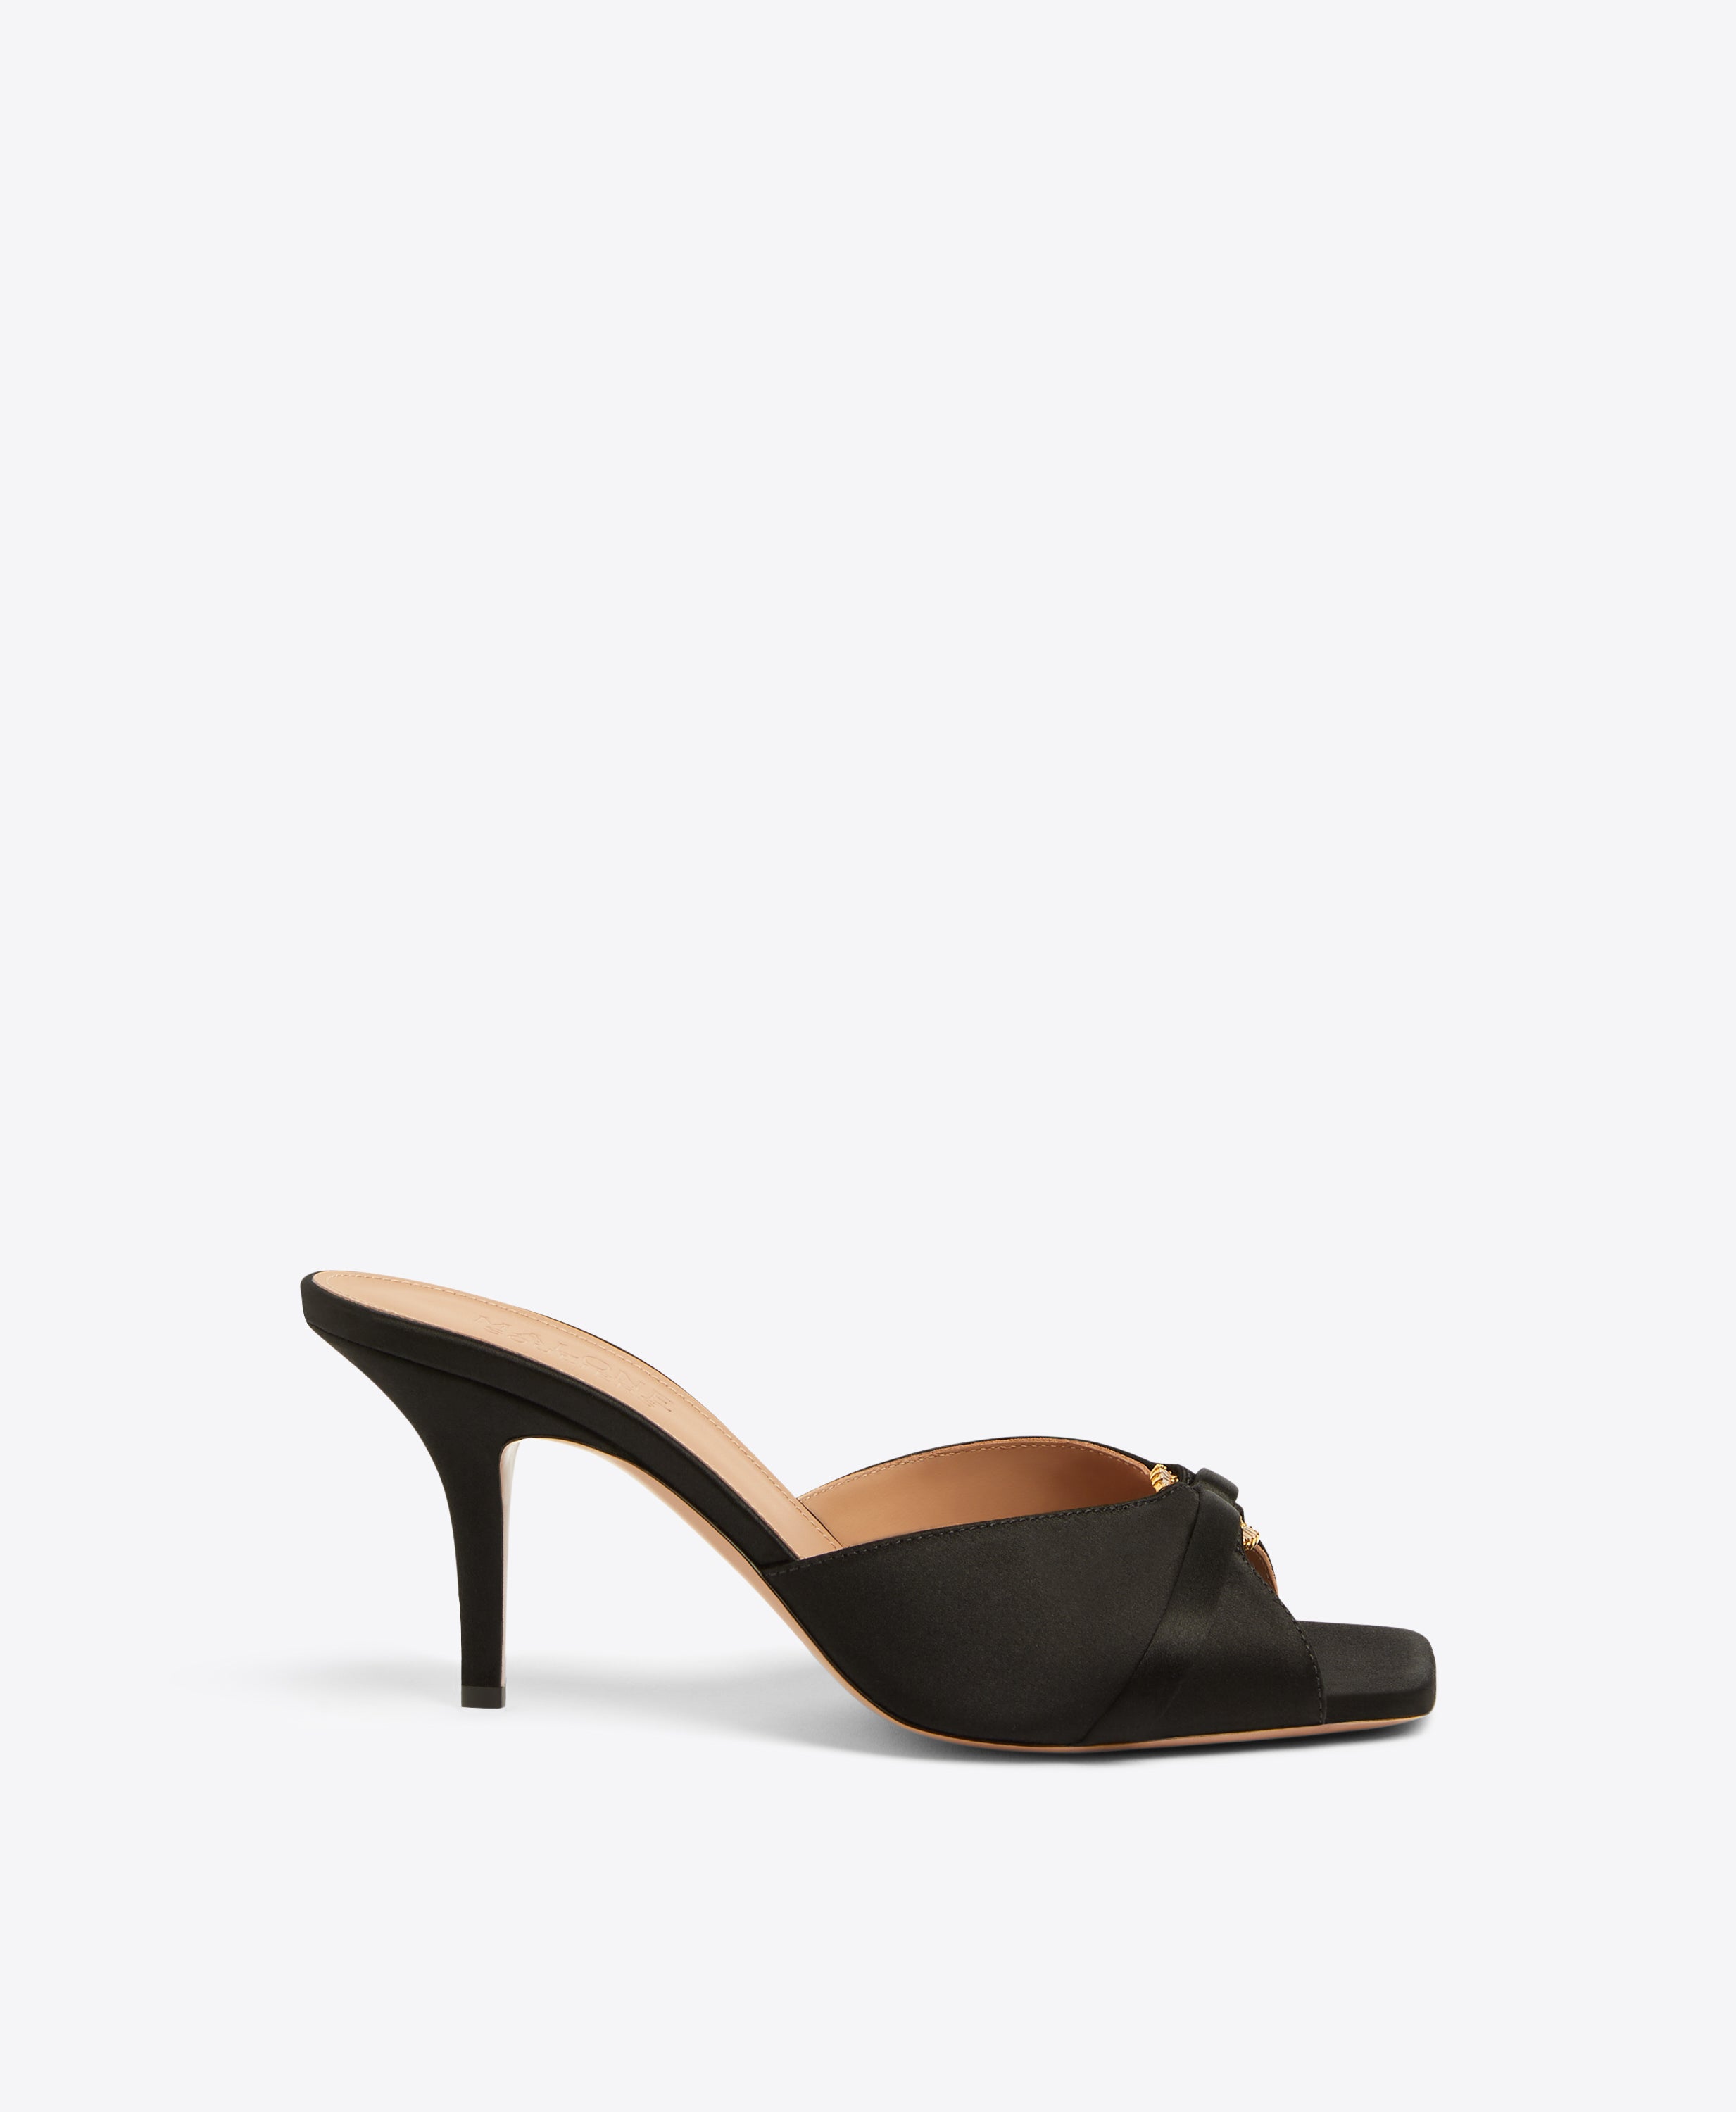 Designer Black Patent Leather High Heel Gold Sandals Heels For Women Metal  Heels Dress Shoes For Summer From Dooshoes8, $98.5 | DHgate.Com